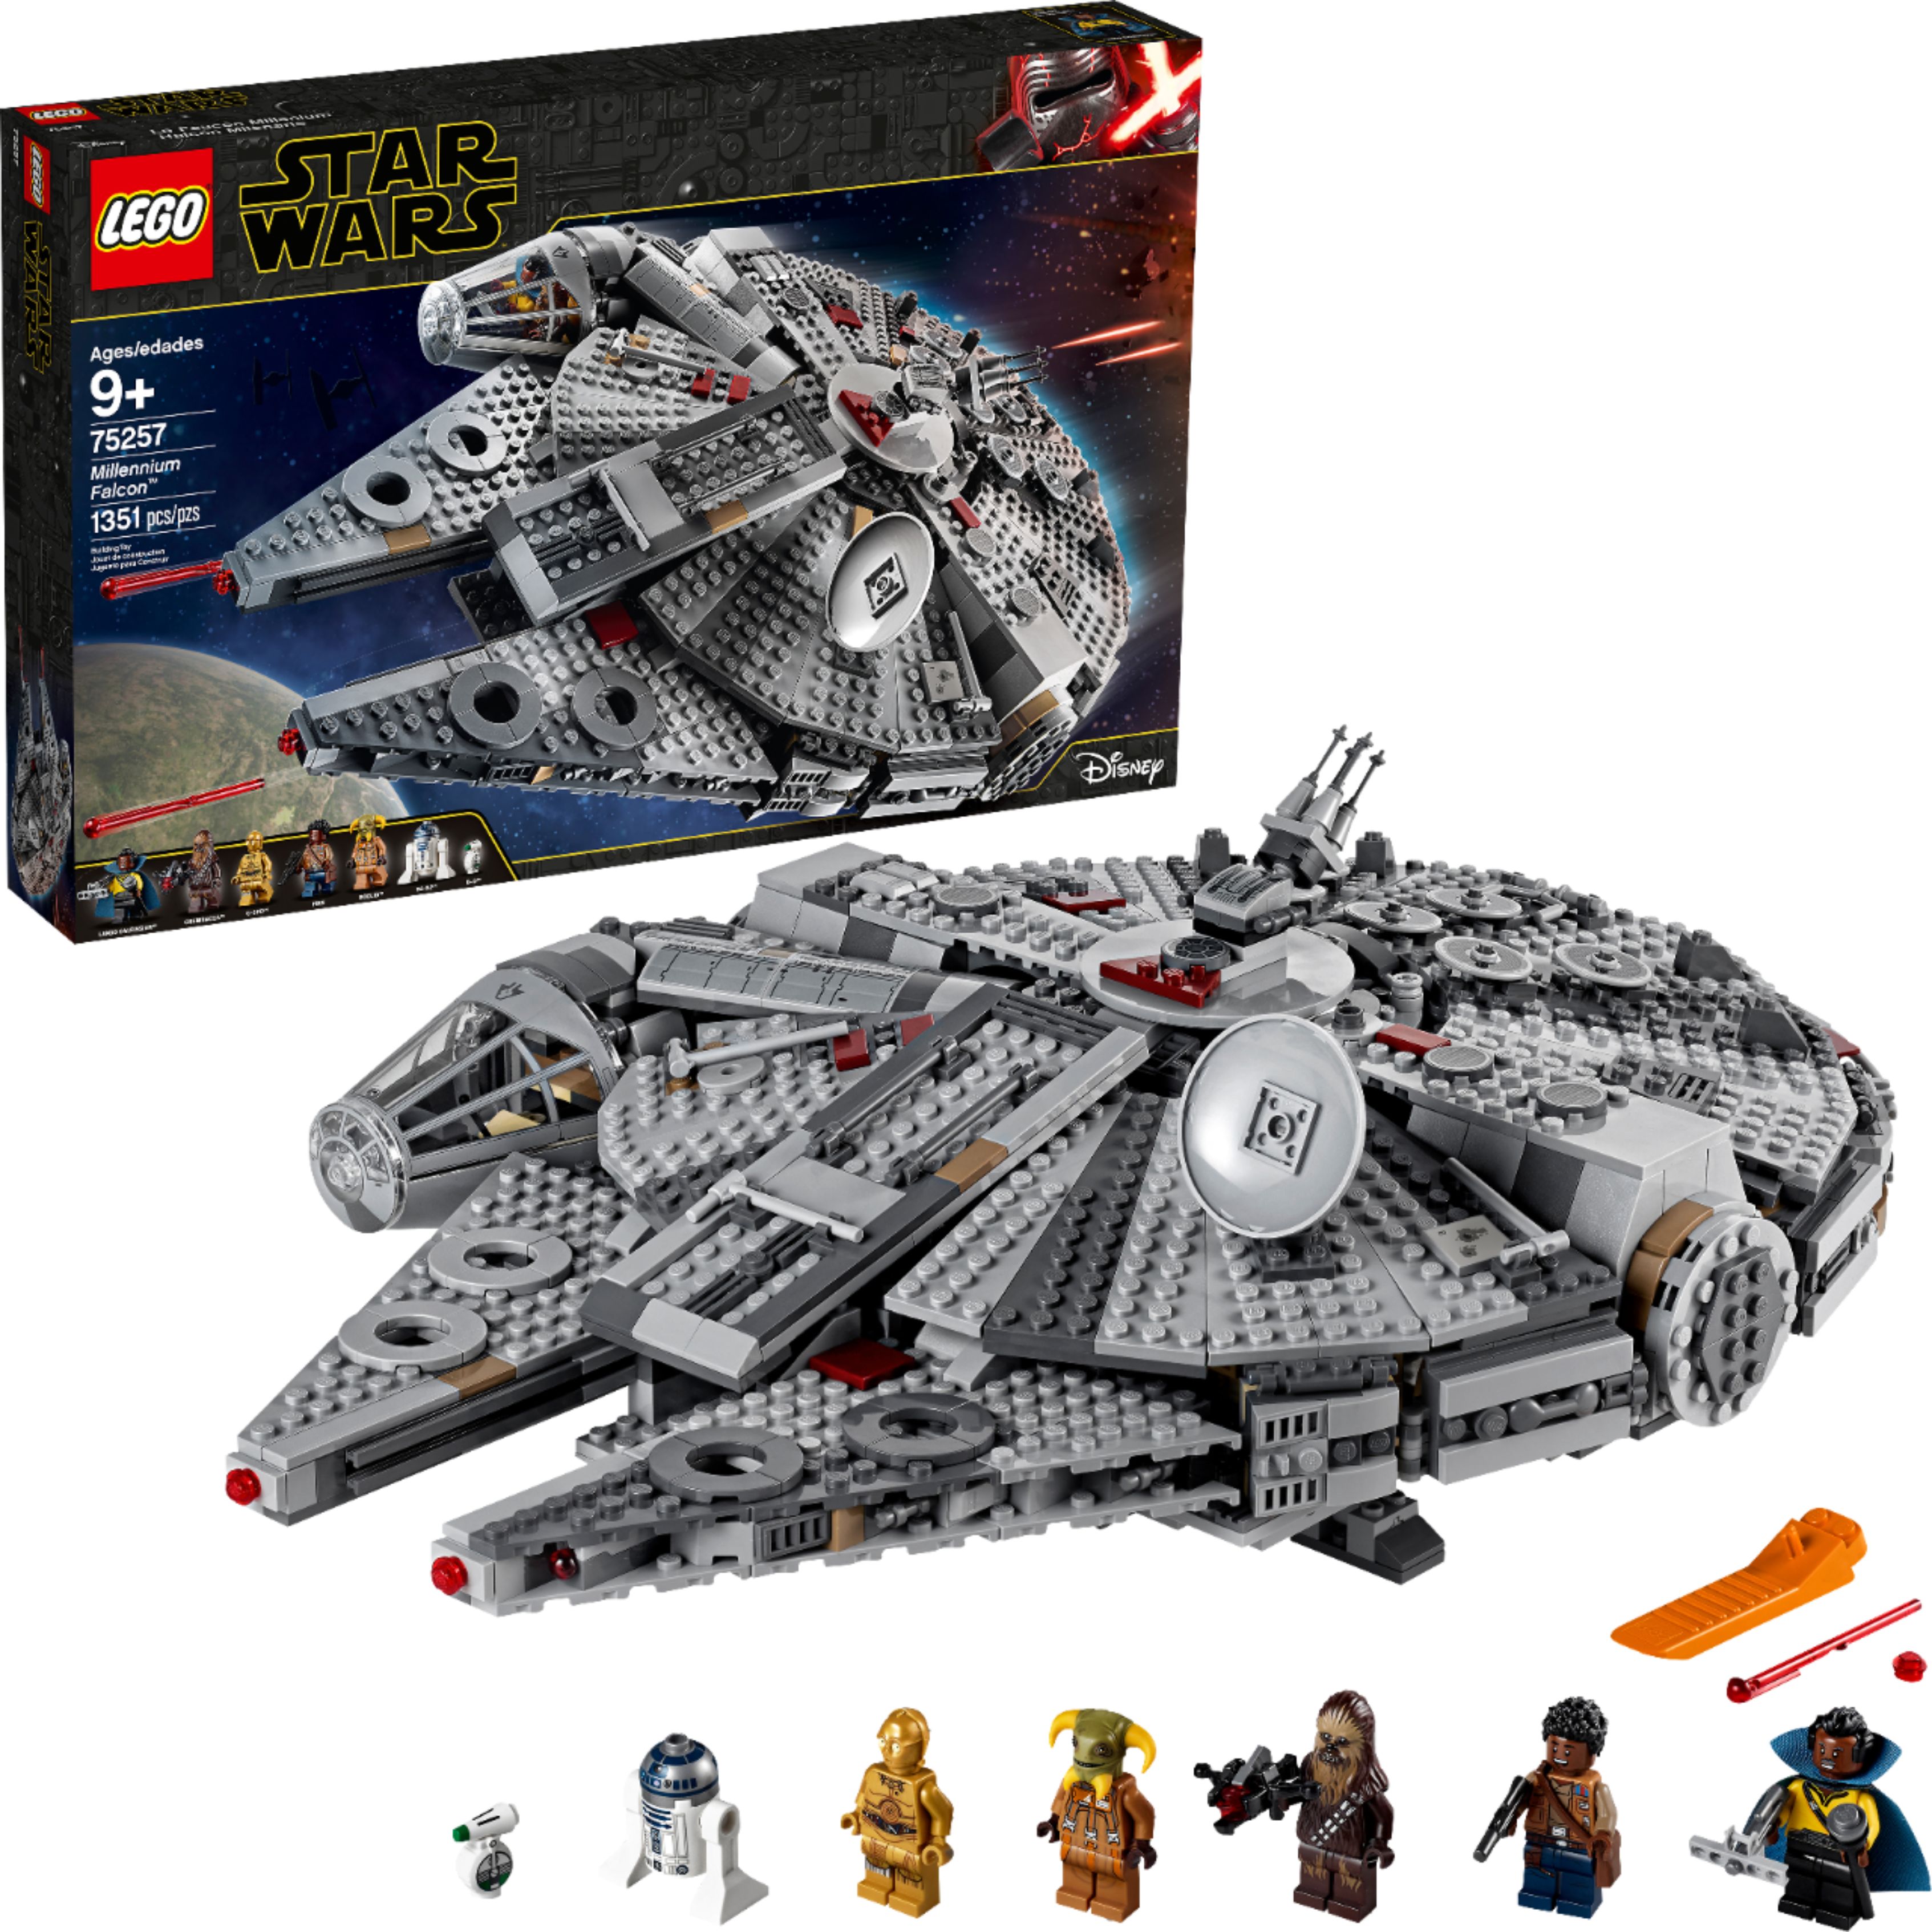 alene Gladys Decrement LEGO Star Wars Millennium Falcon 75257 6251770 - Best Buy